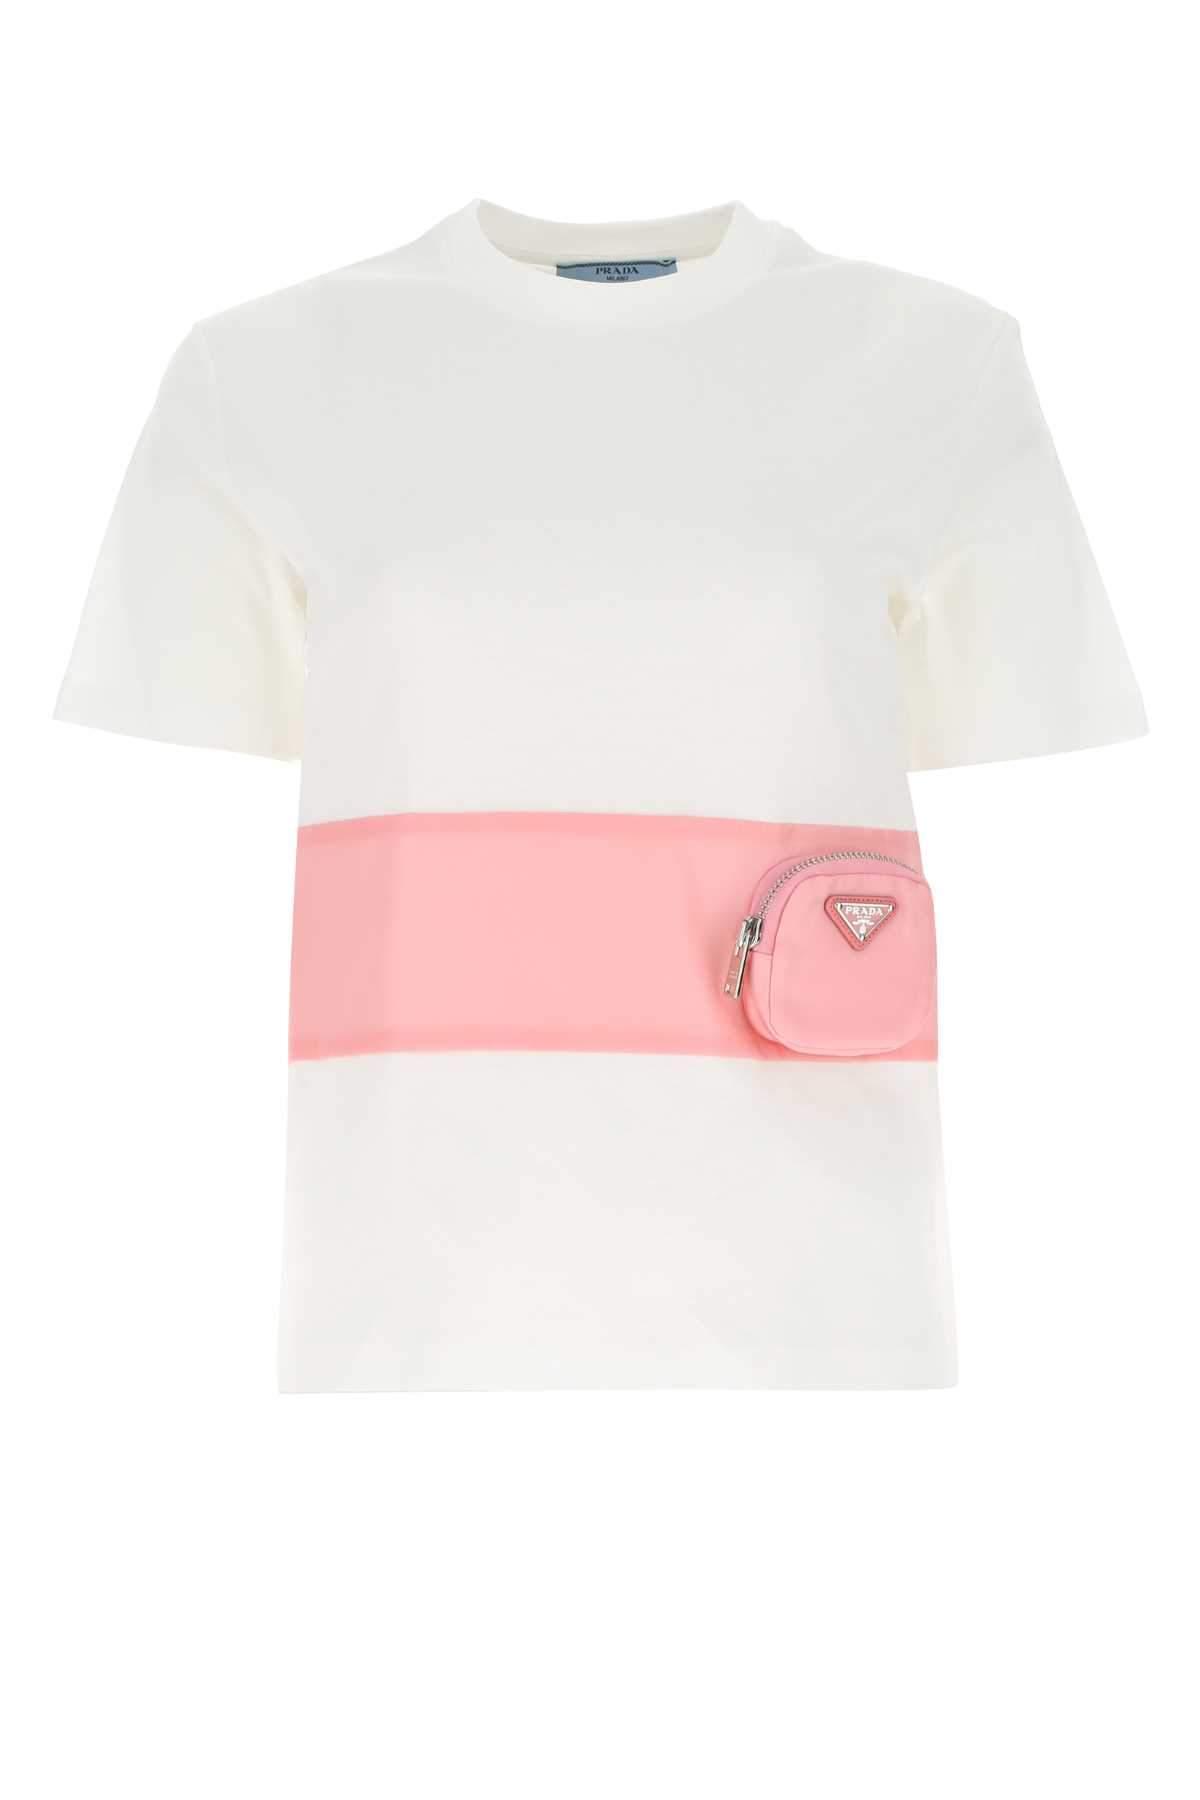 Prada White Cotton T-shirt, Horizontal-stripes Pattern in Pink | Lyst